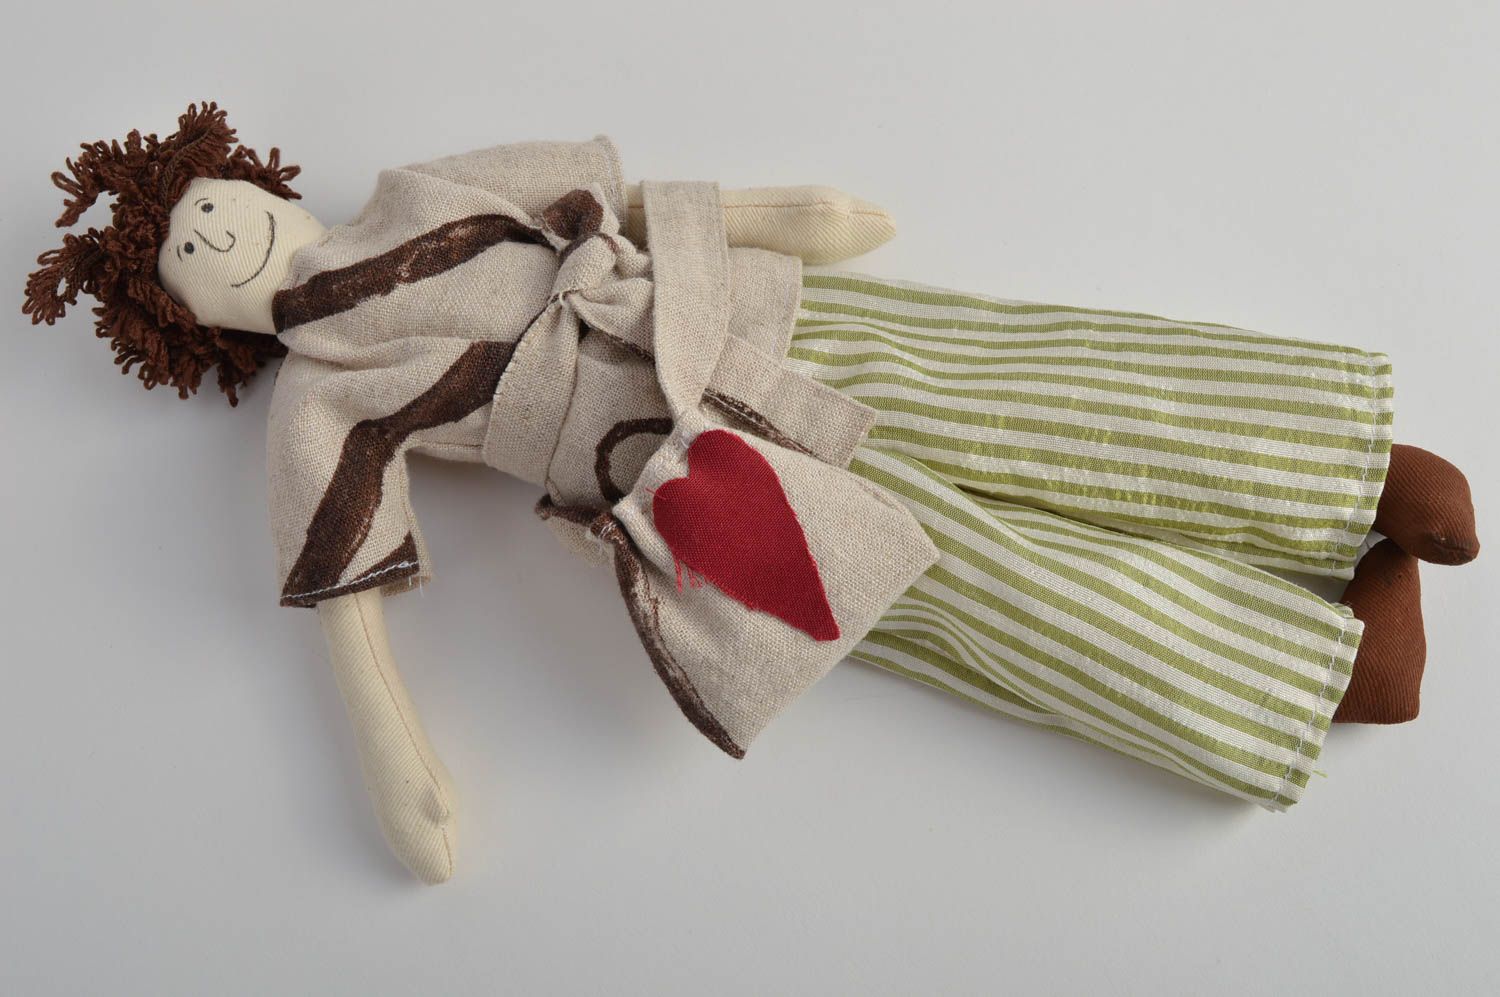 Handmade designer fabric soft doll for kids and interior decor boy with bag photo 3